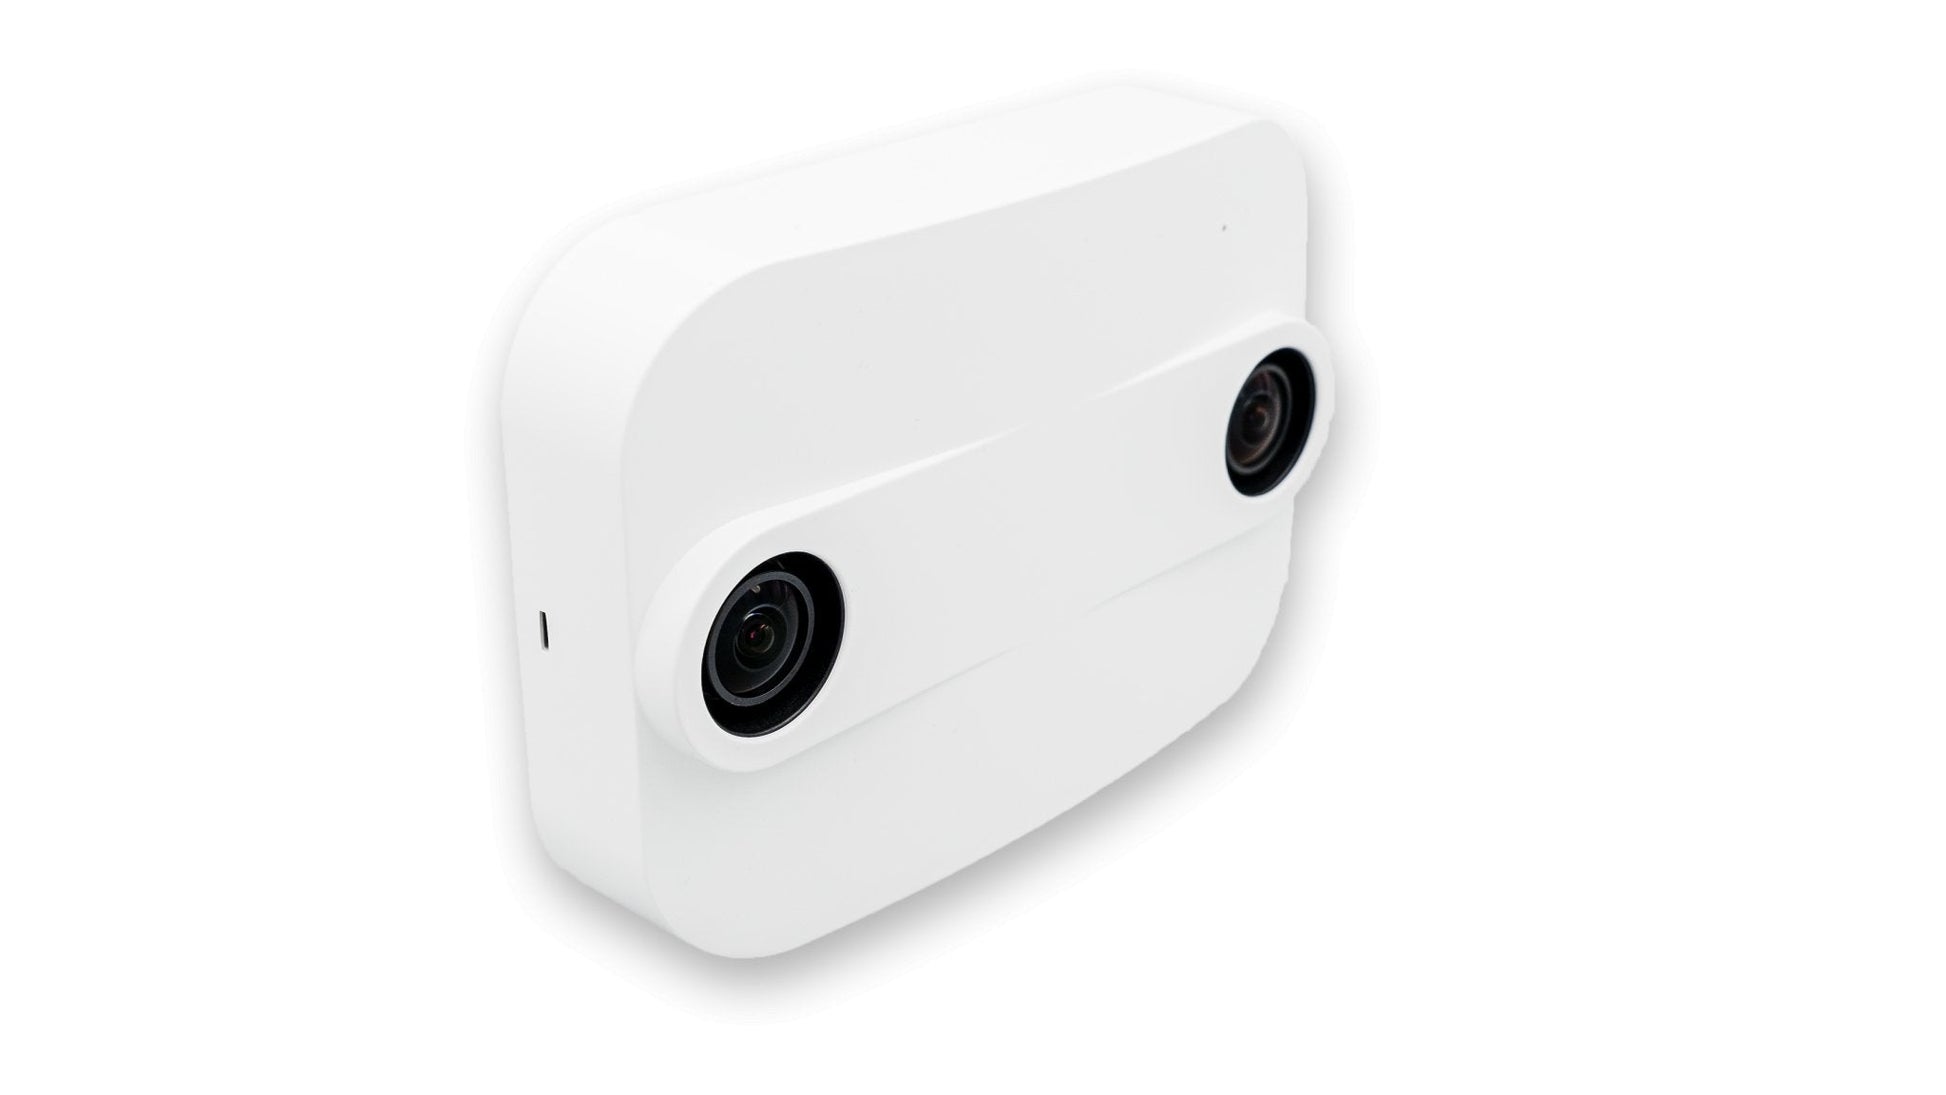 Kundenzähler Xovis 3D - PC2SE 3D Sensor with AI - EastekOnlineshop